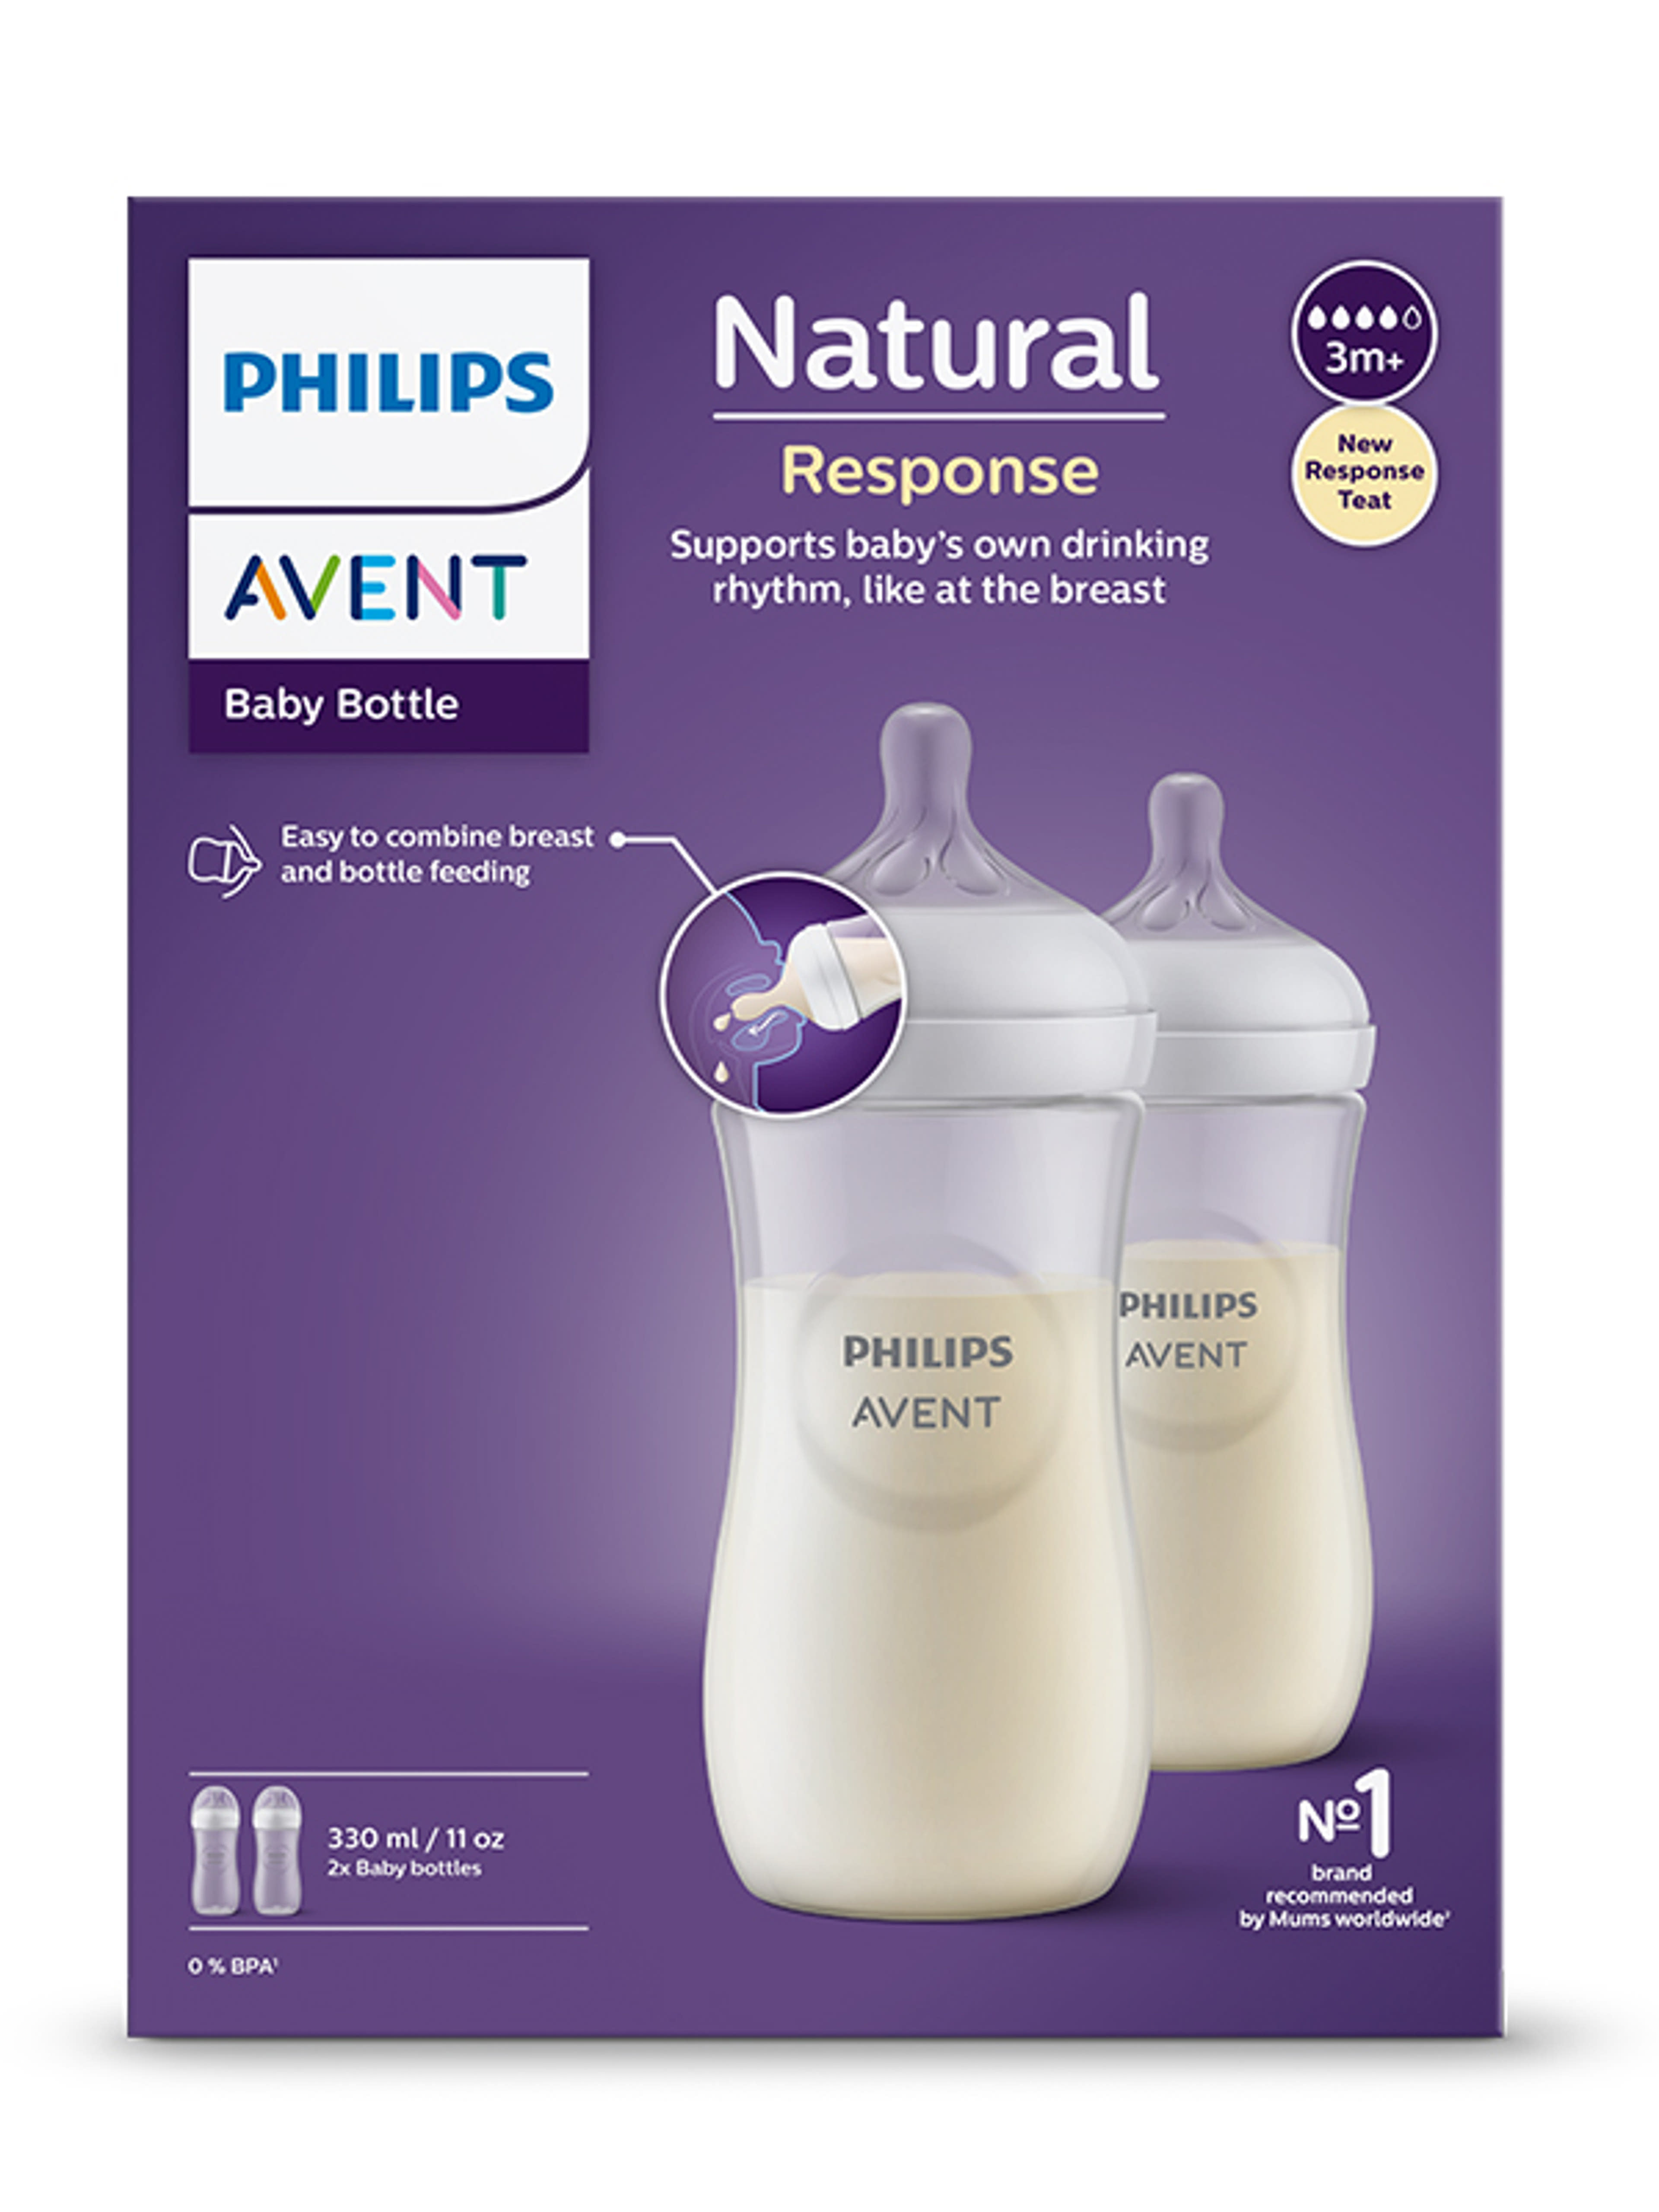 Philips Avent Natural Response cumisüveg 3 hónapos kortól 330 ml - 2 db